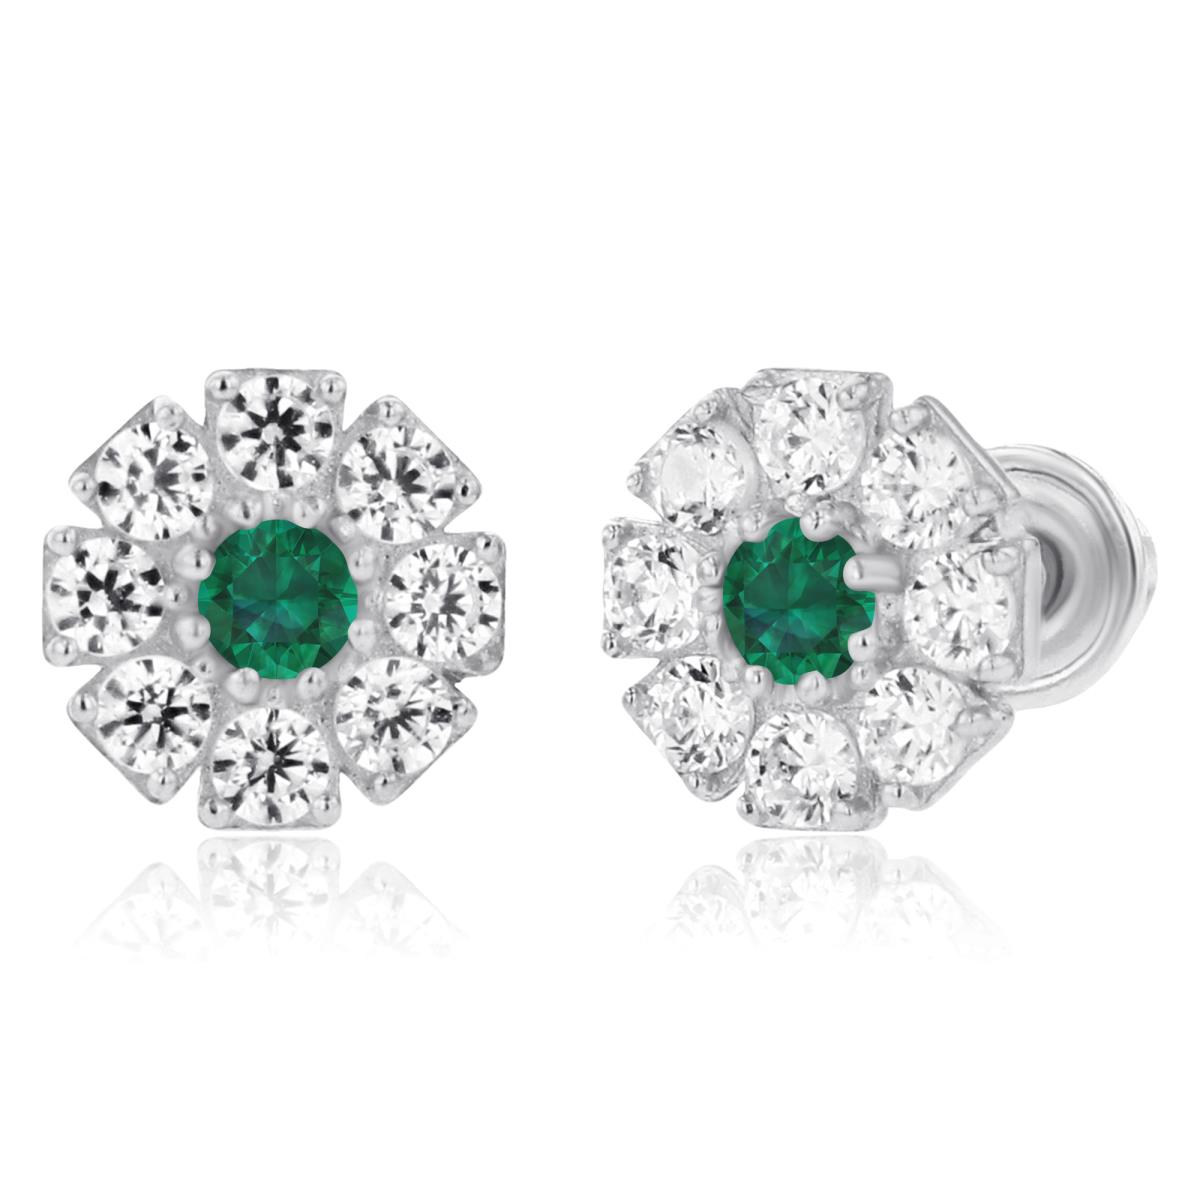 14K White Gold 2mm Round Created Emerald & 1.5mm Created White Sapphire Flower Screwback Earrings